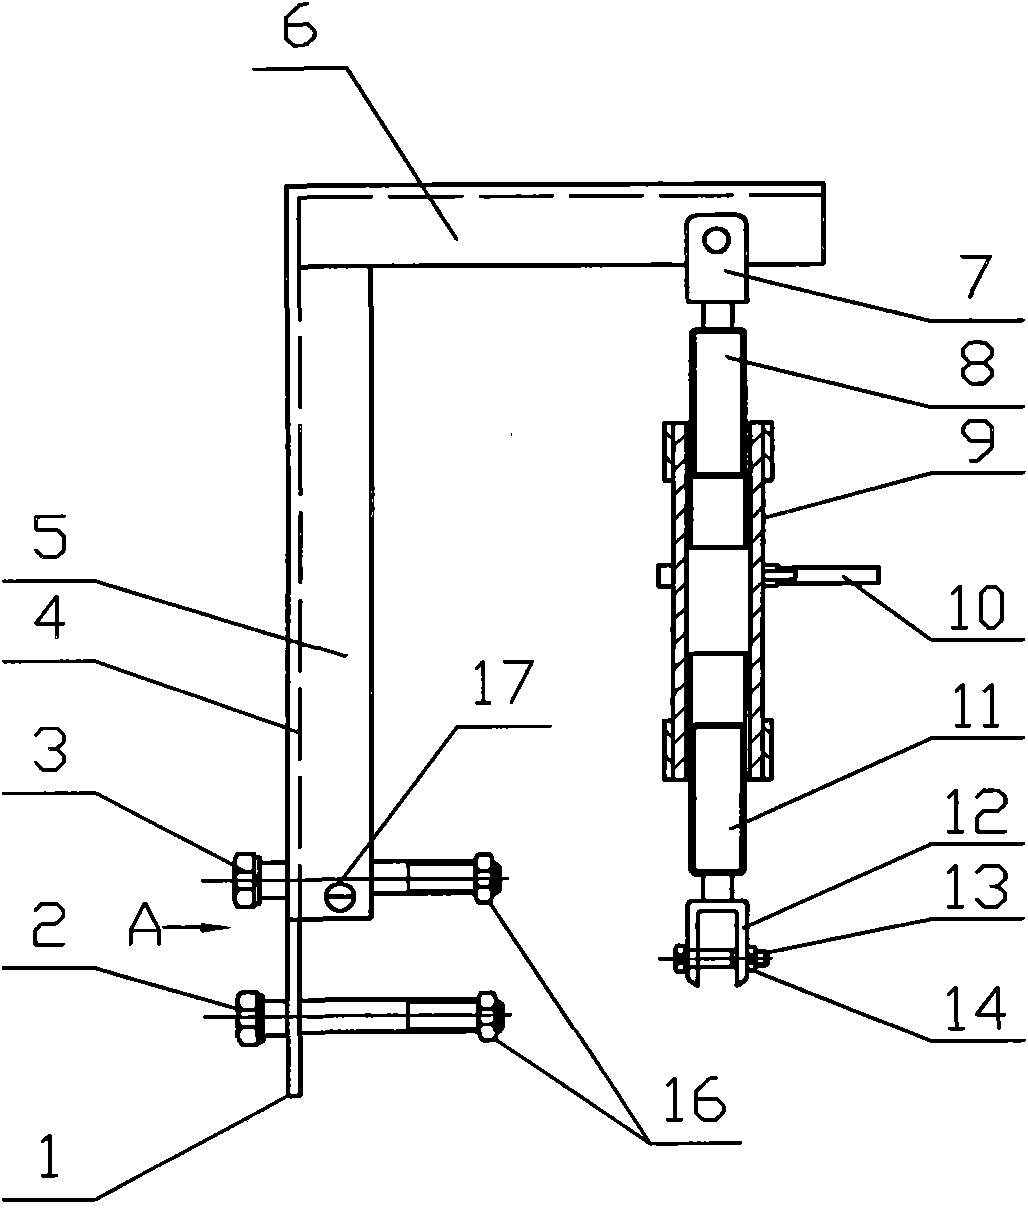 Tower ground wire universal lifting mechanism